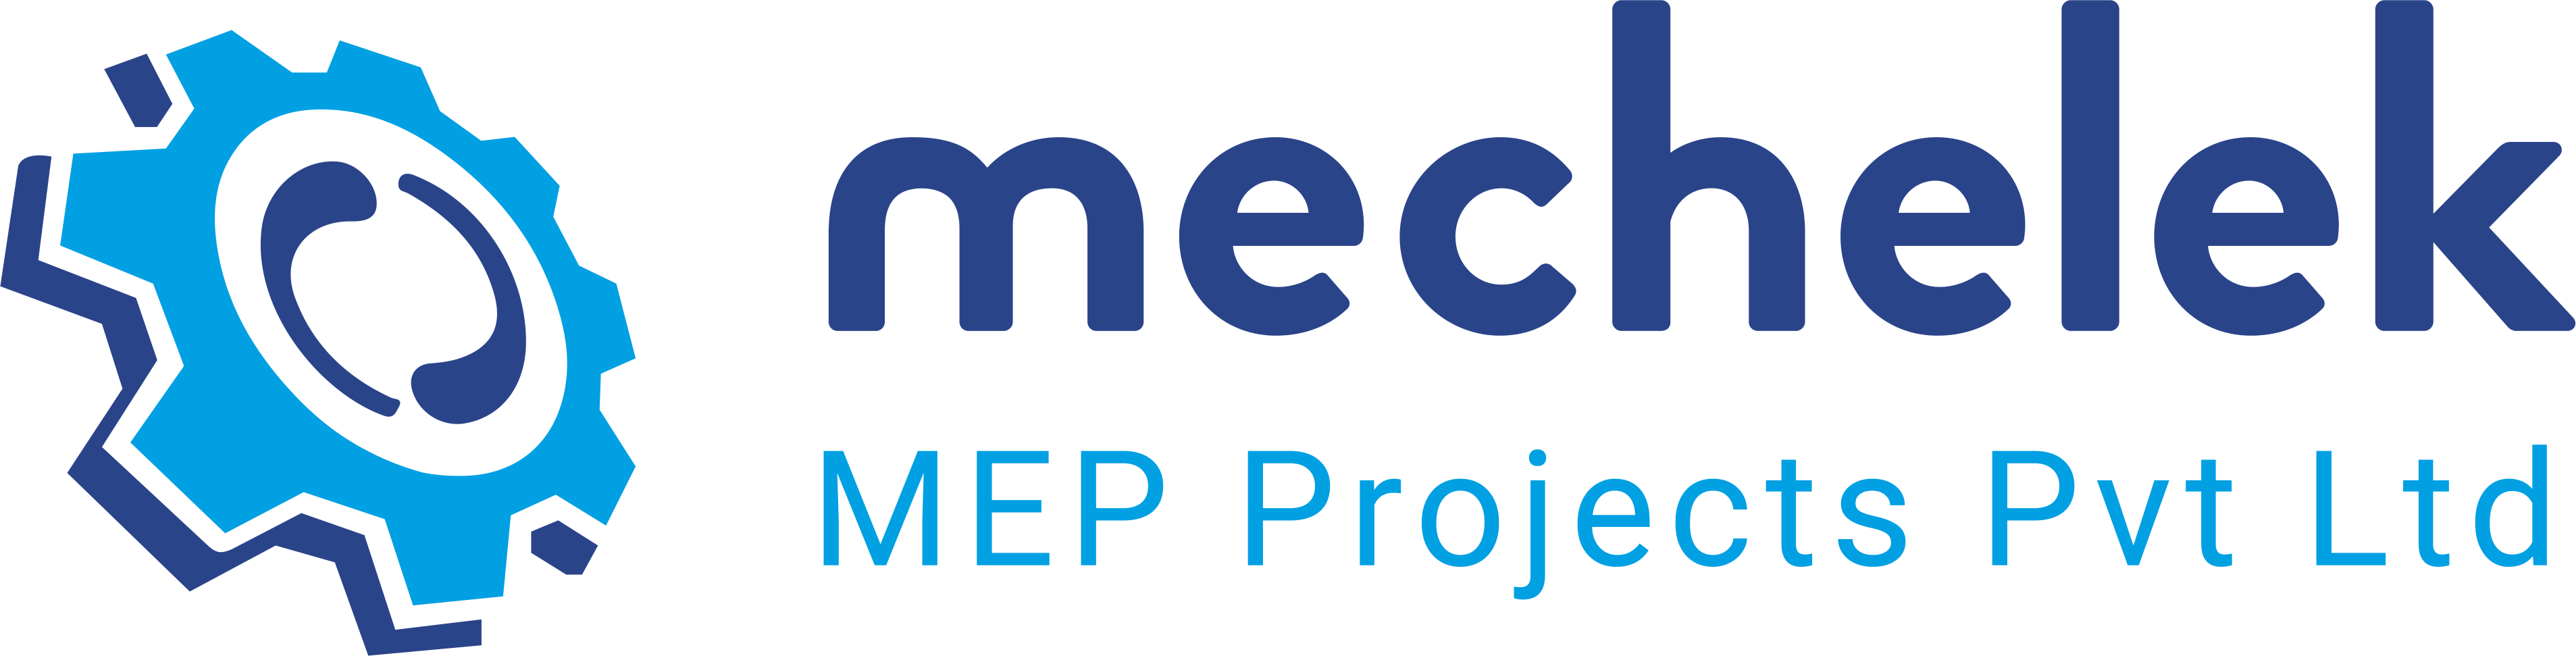 Mechelek MEP Projects Pvt Ltd Logo